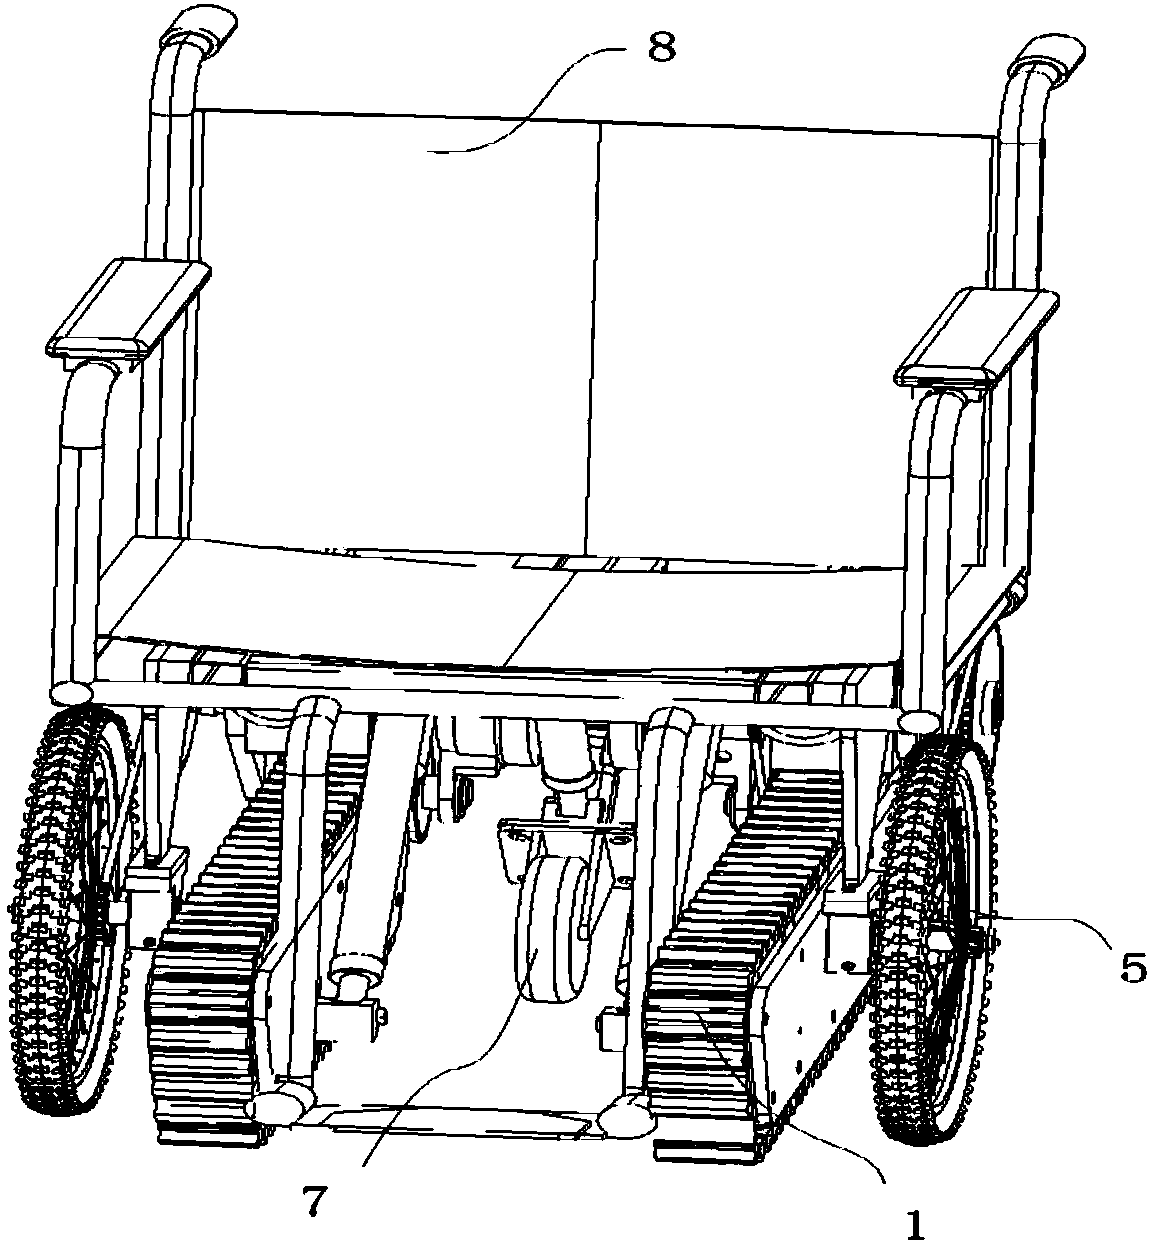 Electric-control crawler-type stair climbing walking composite vehicle